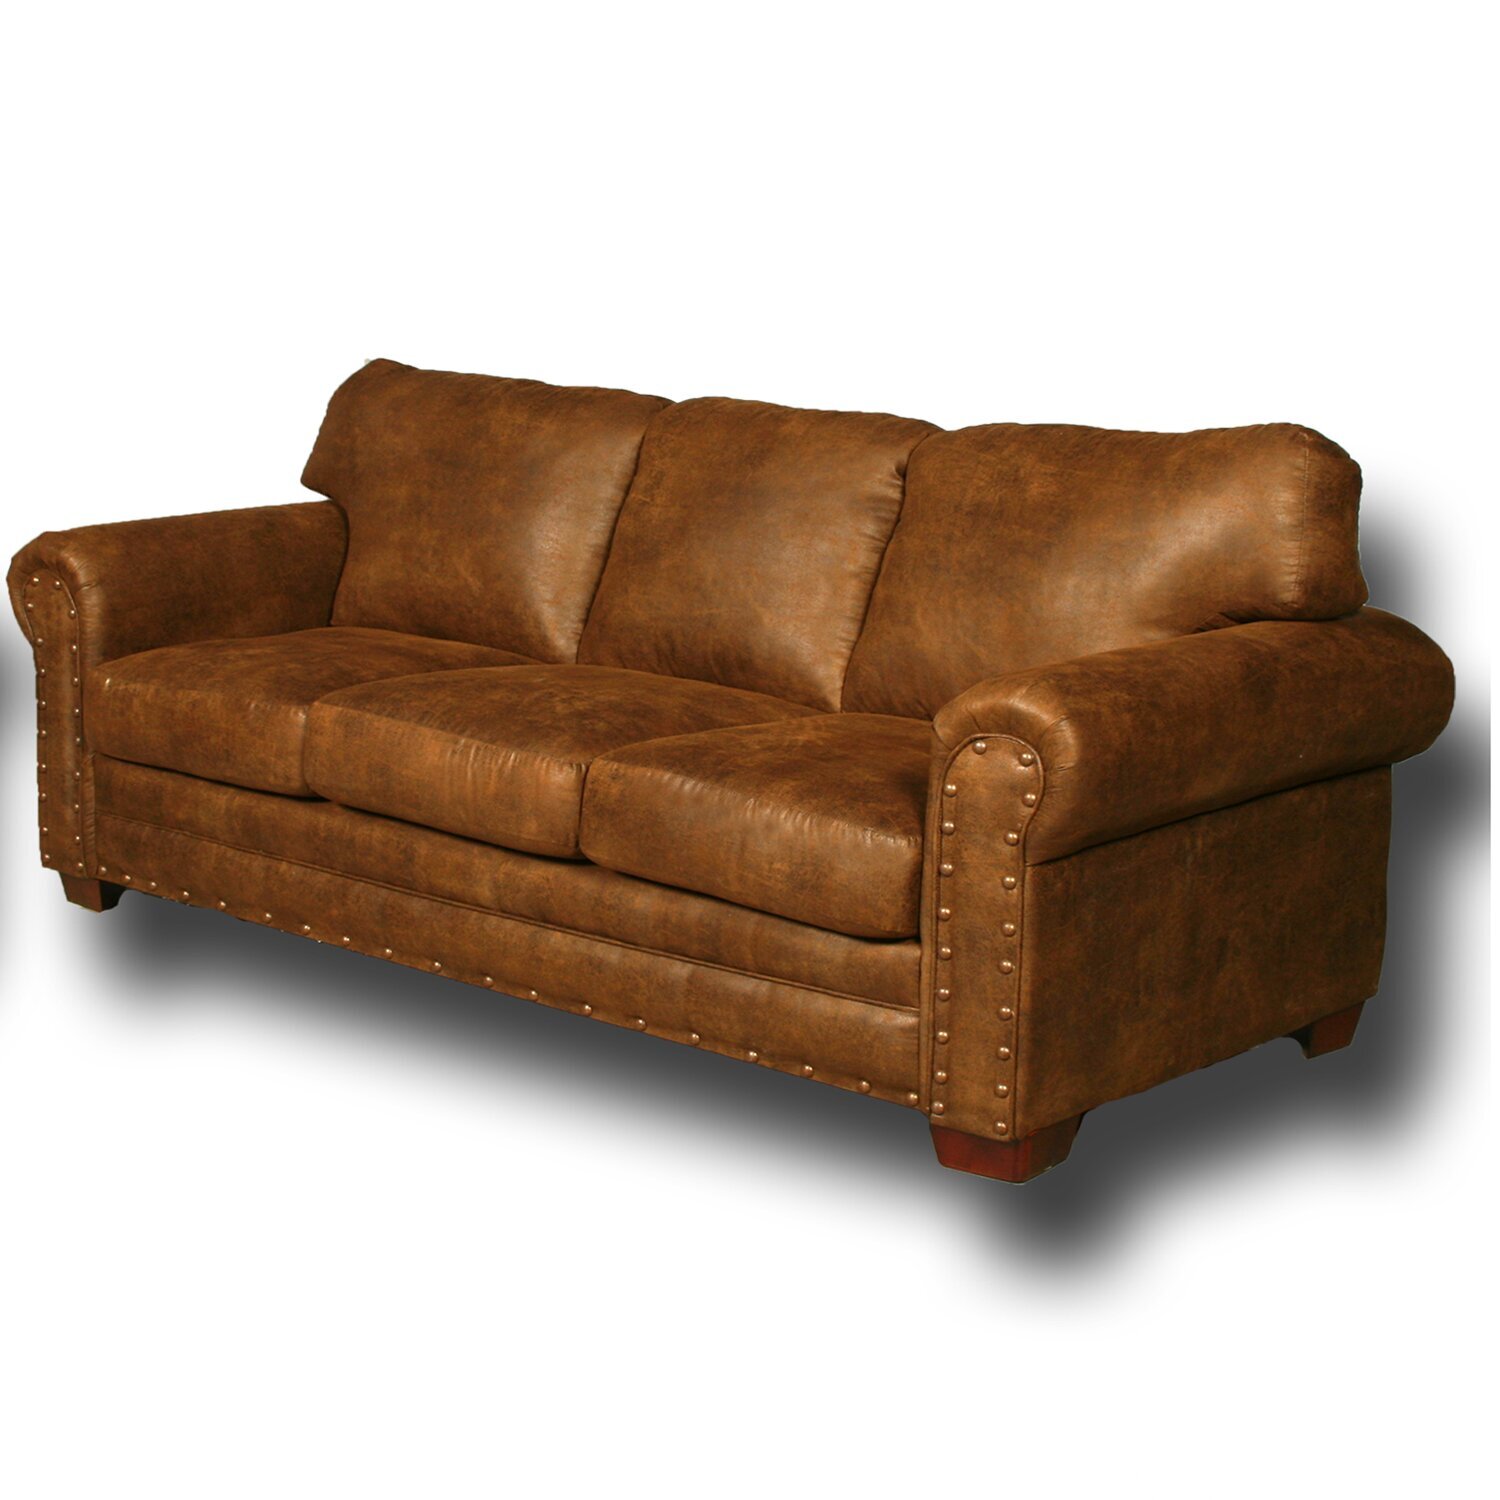 Ezra 88” Rolled Arm Sofa Bed